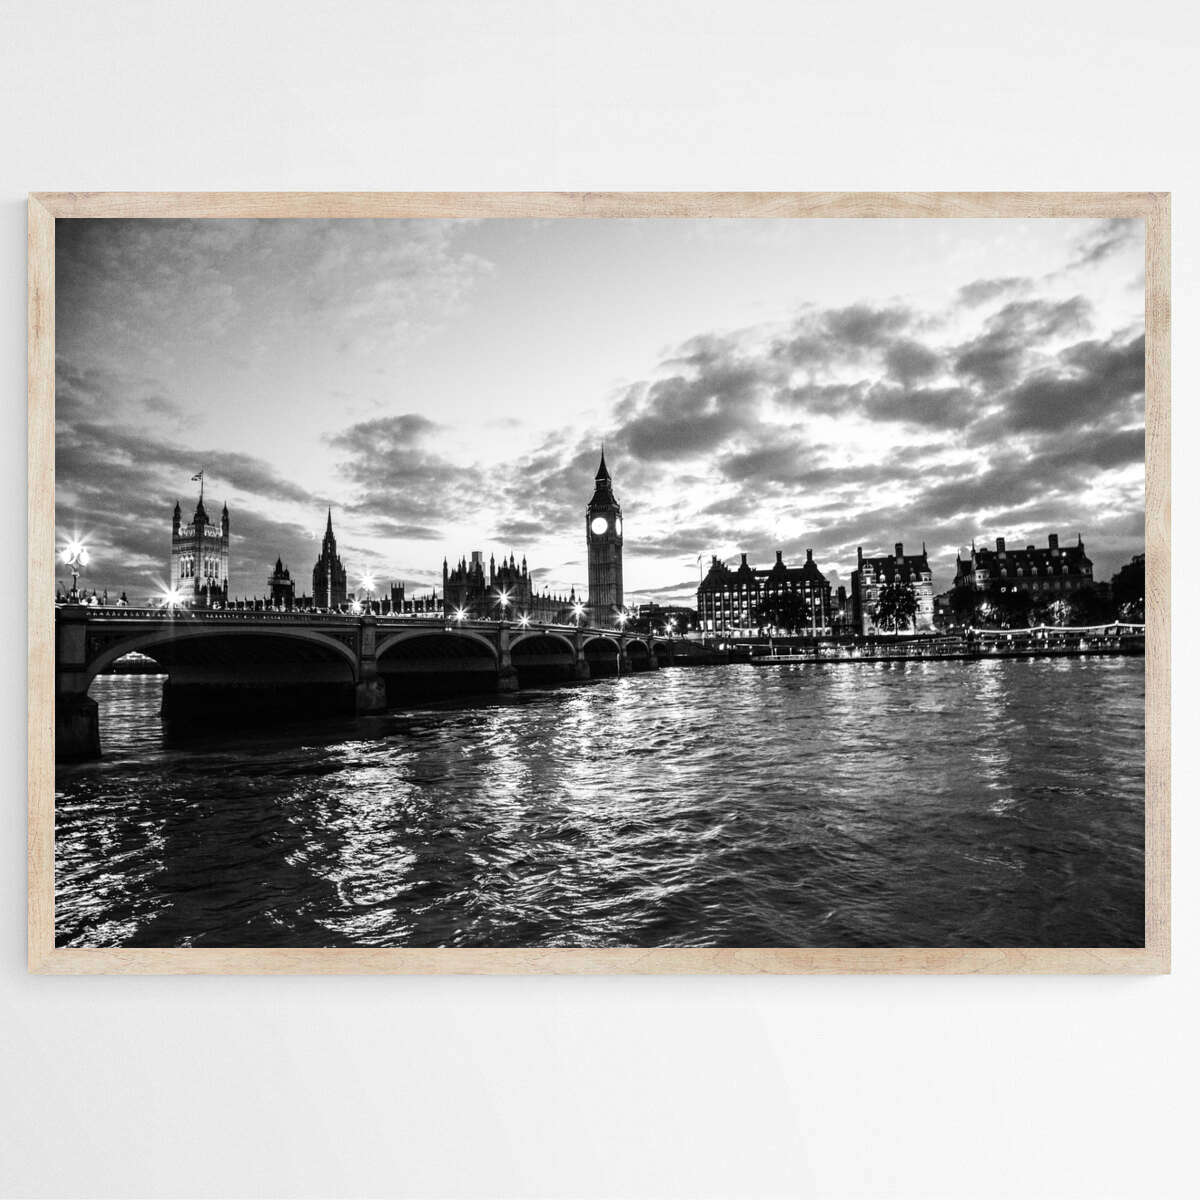 Big Ben by the River Thames | Destinations Wall Art Prints - The Canvas Hive